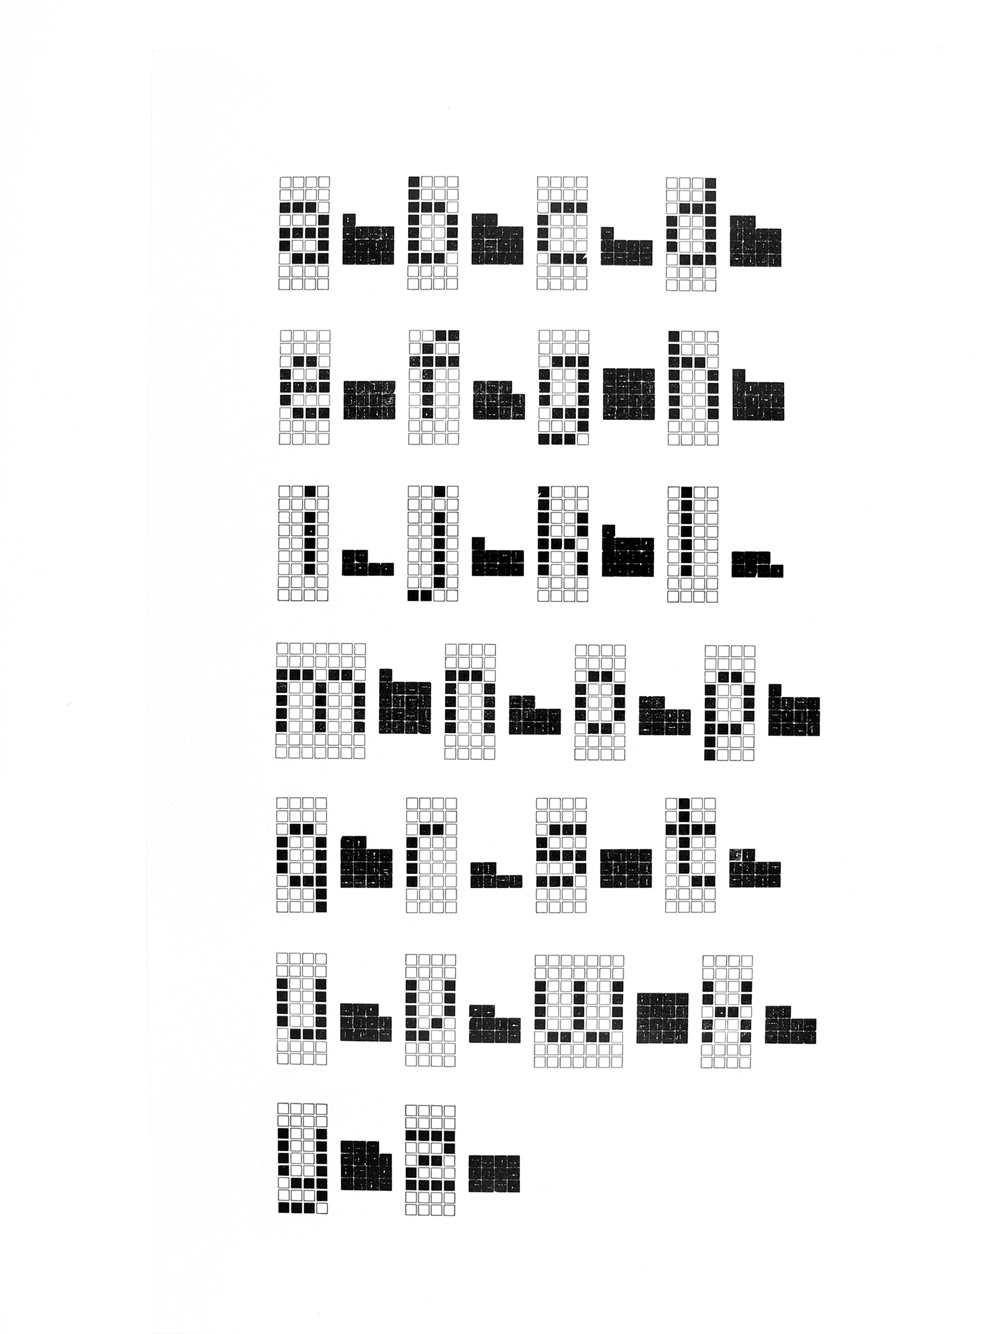 letterpress design wim crouwel adrian frutiger type design Modular type typographic elements blackness poster font Book Binding print and finishing